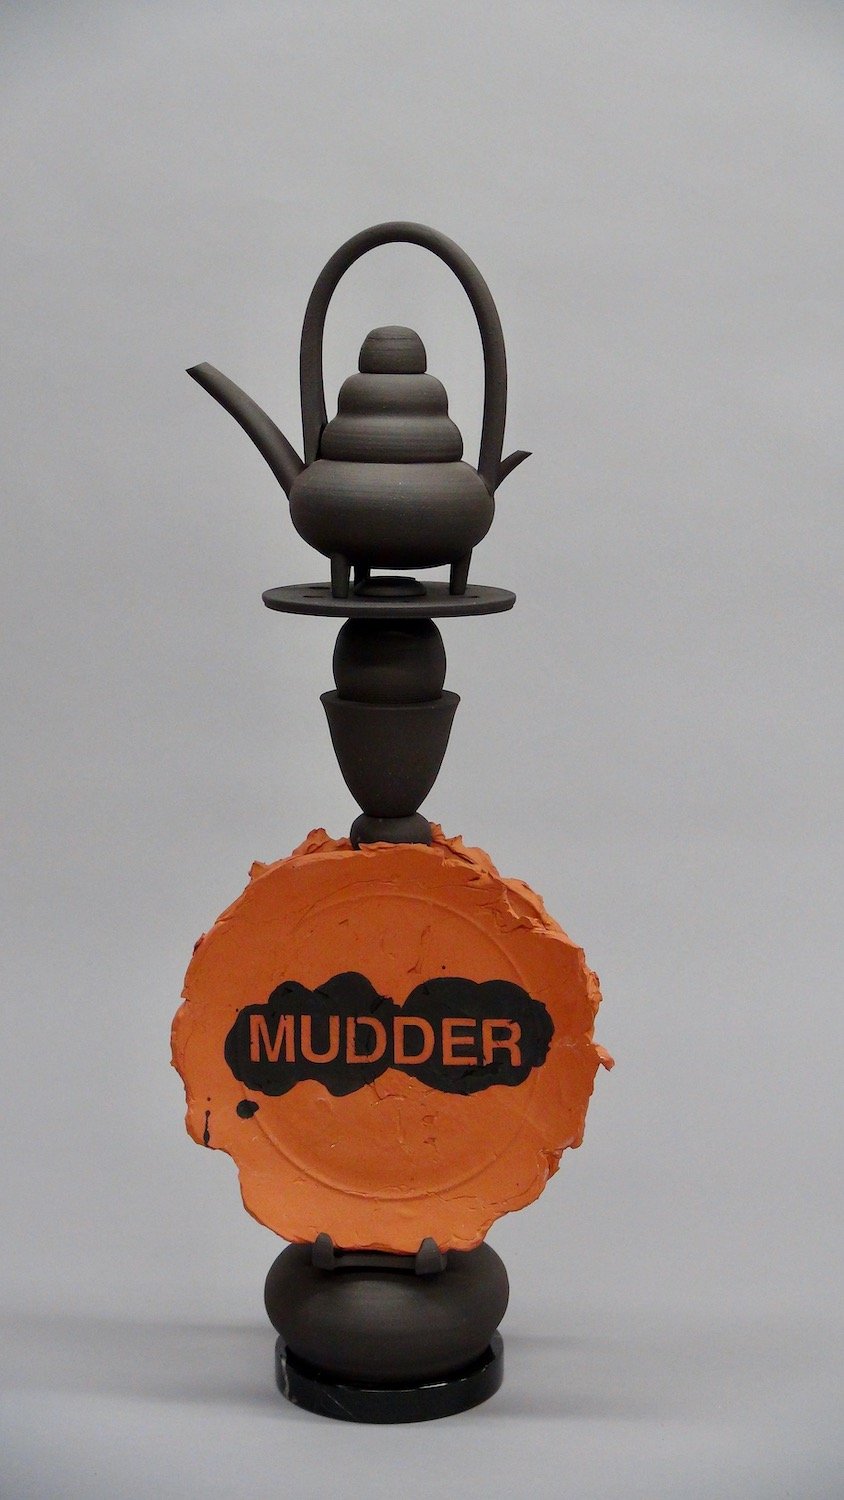 "Mudder"